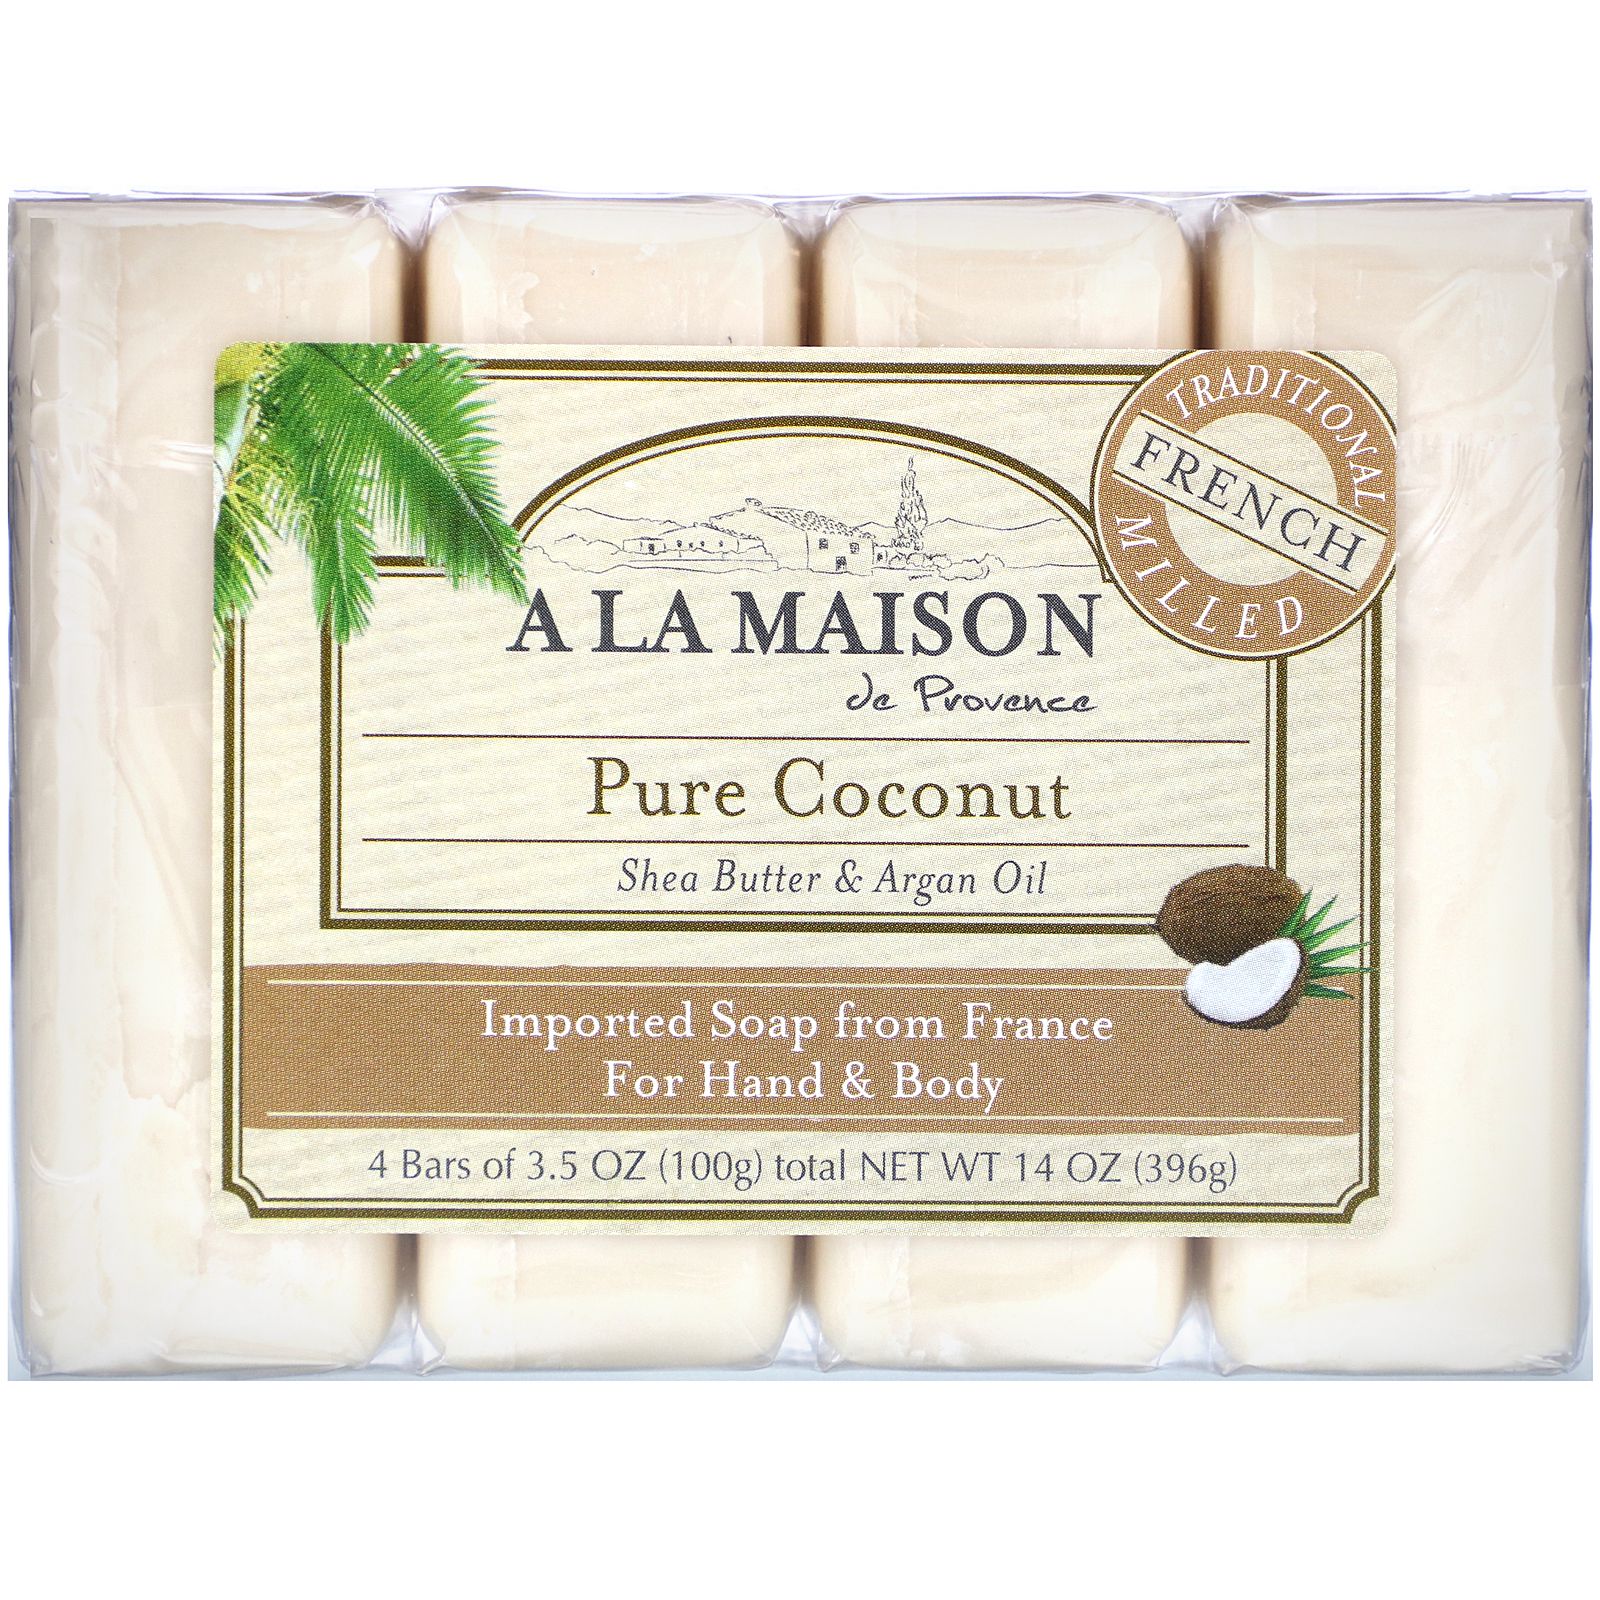 A La Maison de Provence Мыло для рук & тела Чистый кокос 4 бруска по 3.5 унции цена и фото